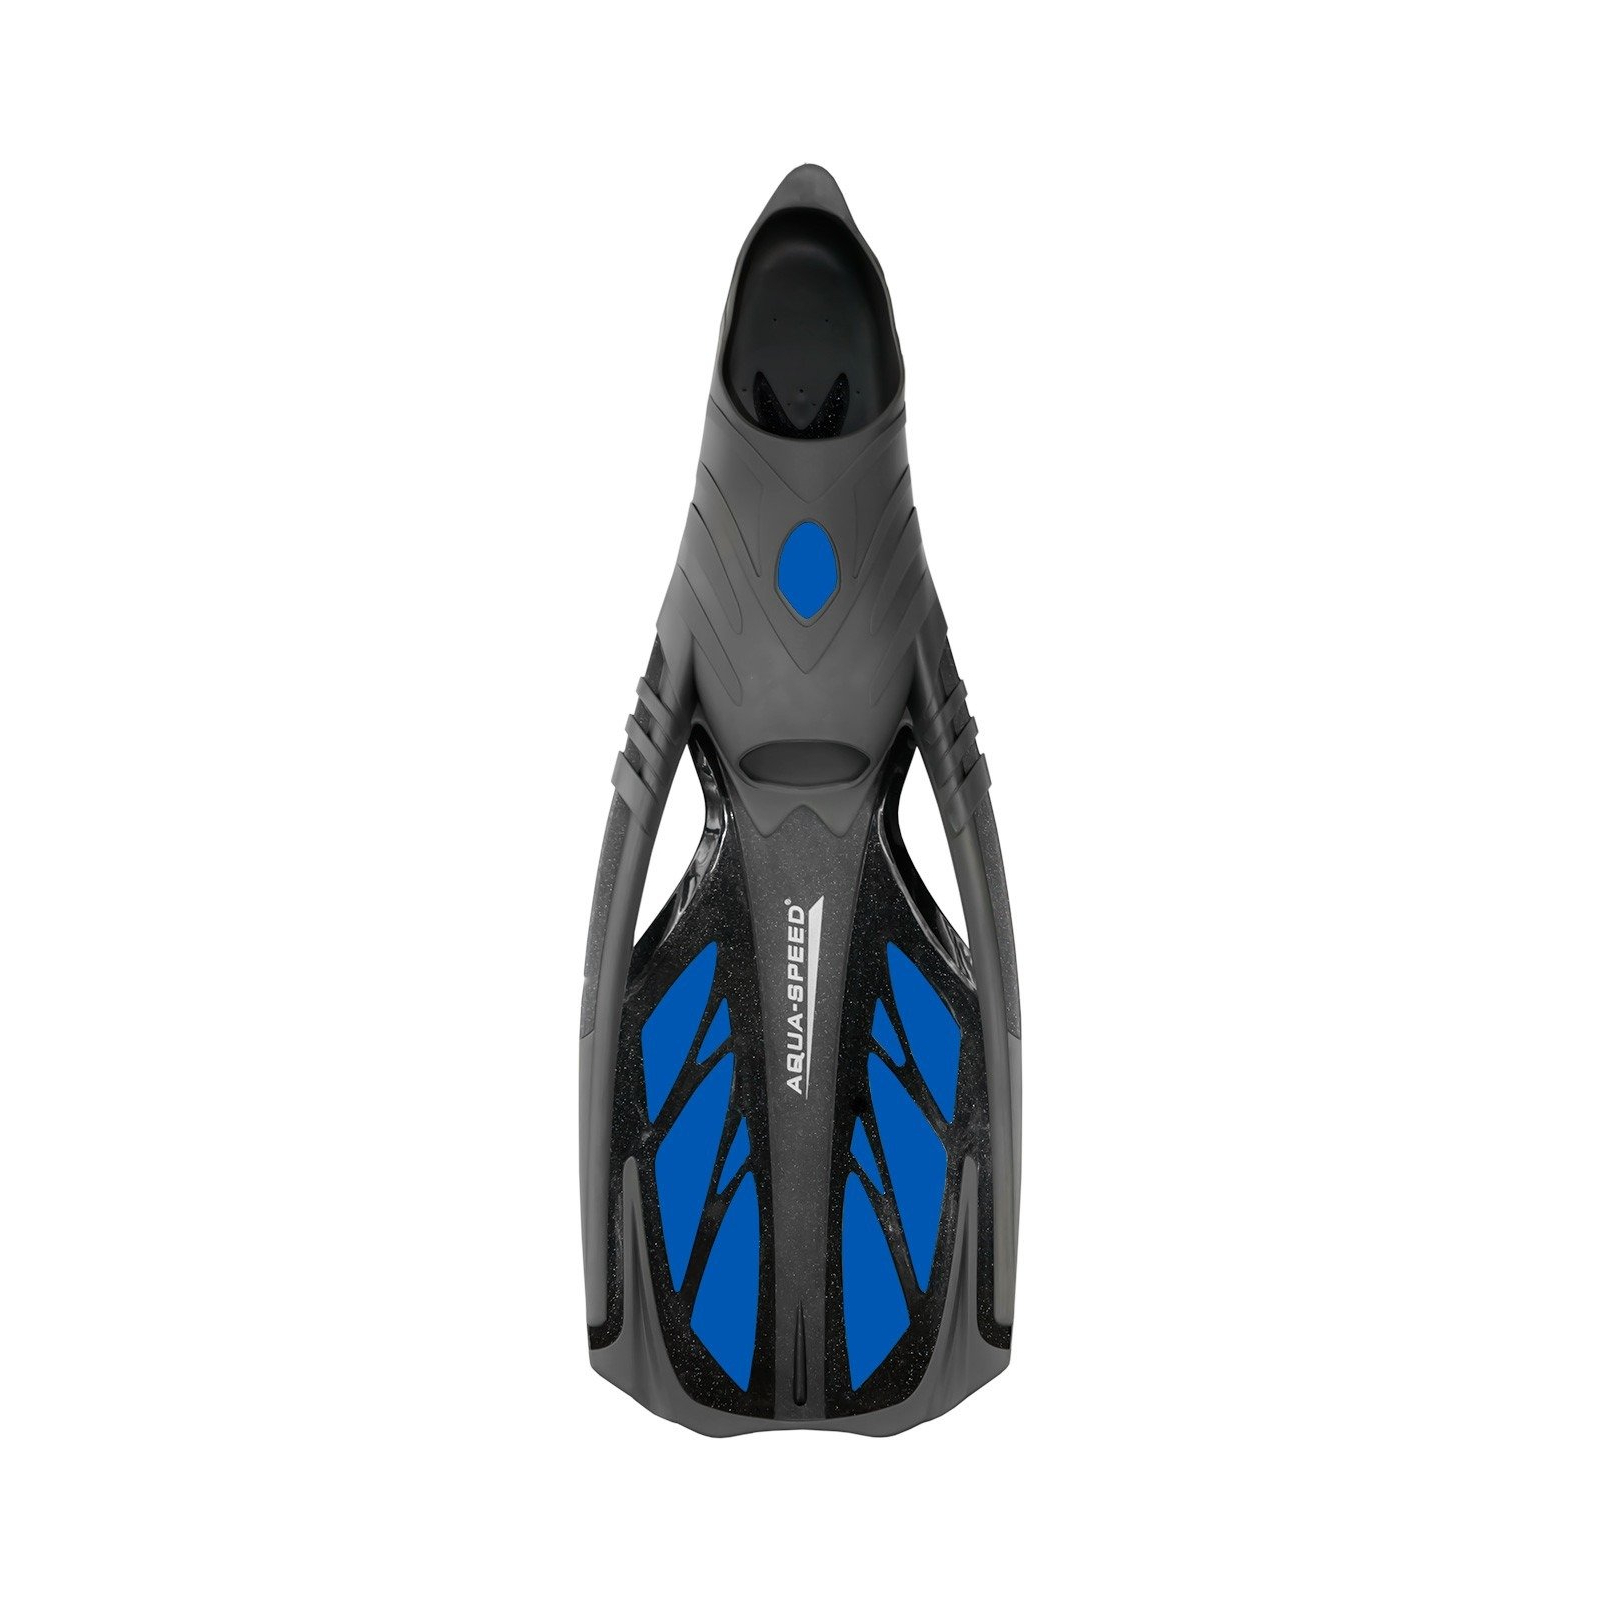 Ласты Aqua Speed Inox 553-11 5113 синій, чорний, сірий 38-39 (5908217651136) изображение 3